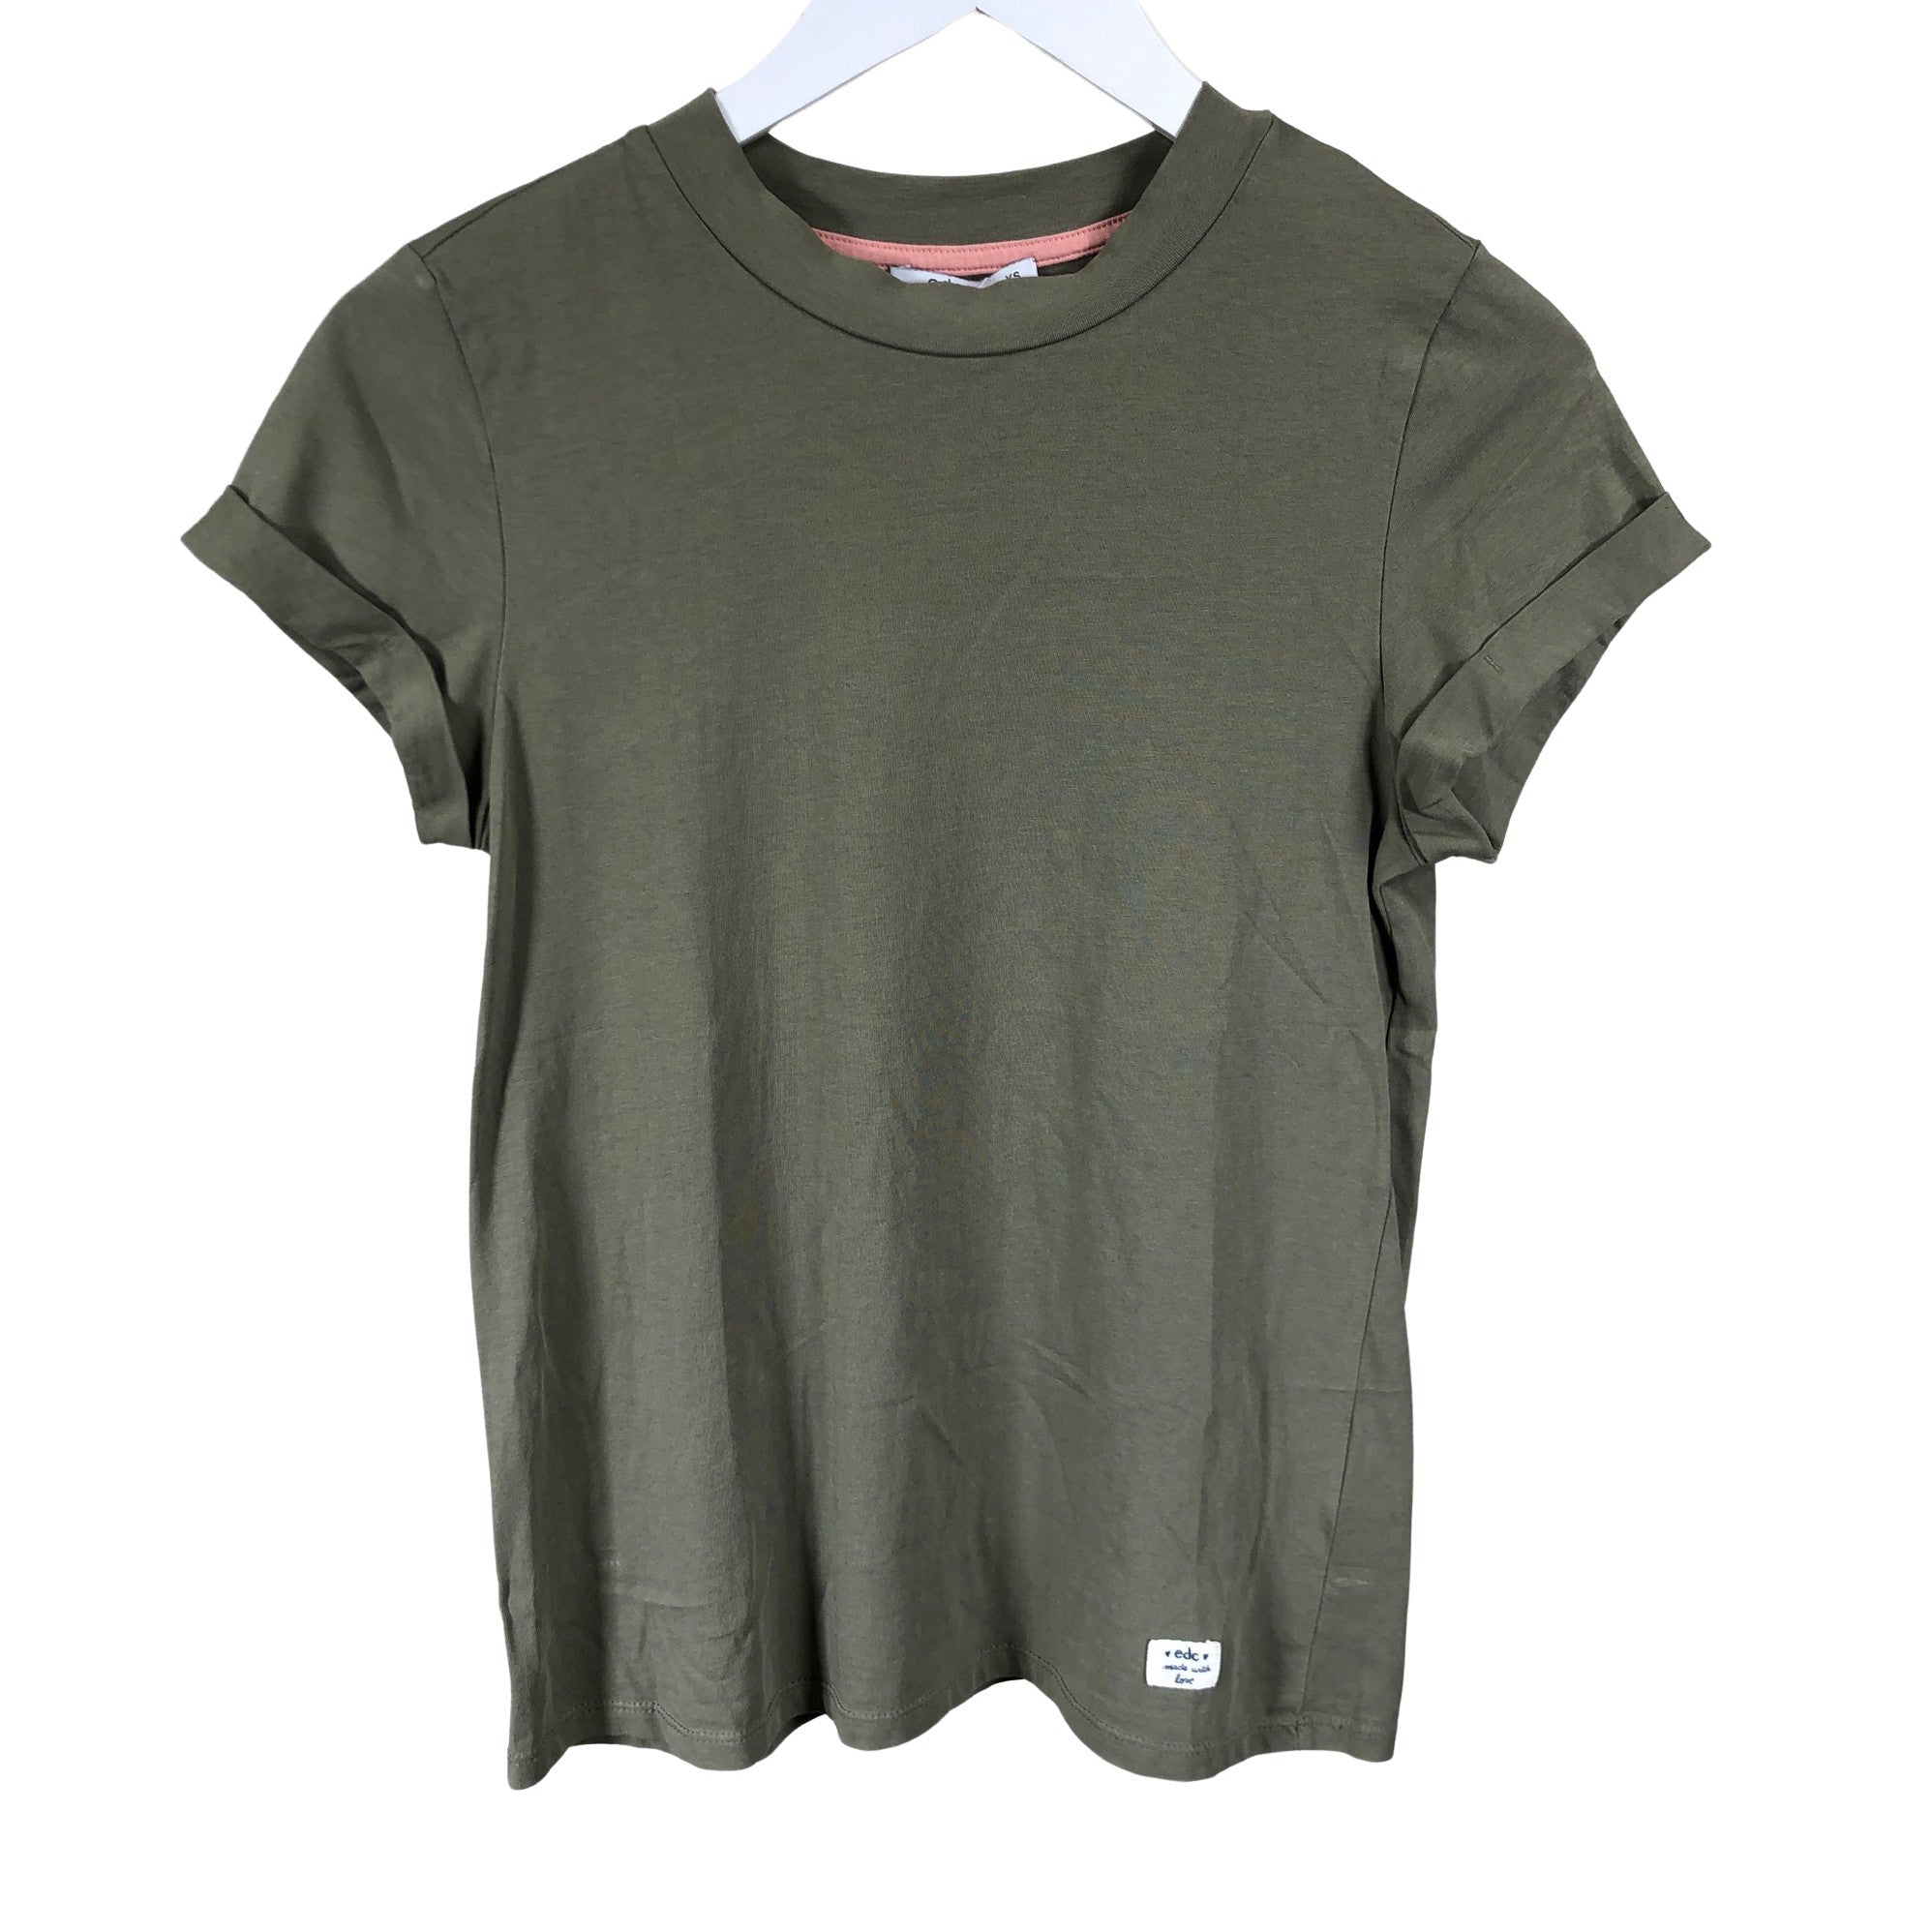 Oefenen doe alstublieft niet Portret Women's Esprit T-shirt, size 34 (Green) | Emmy